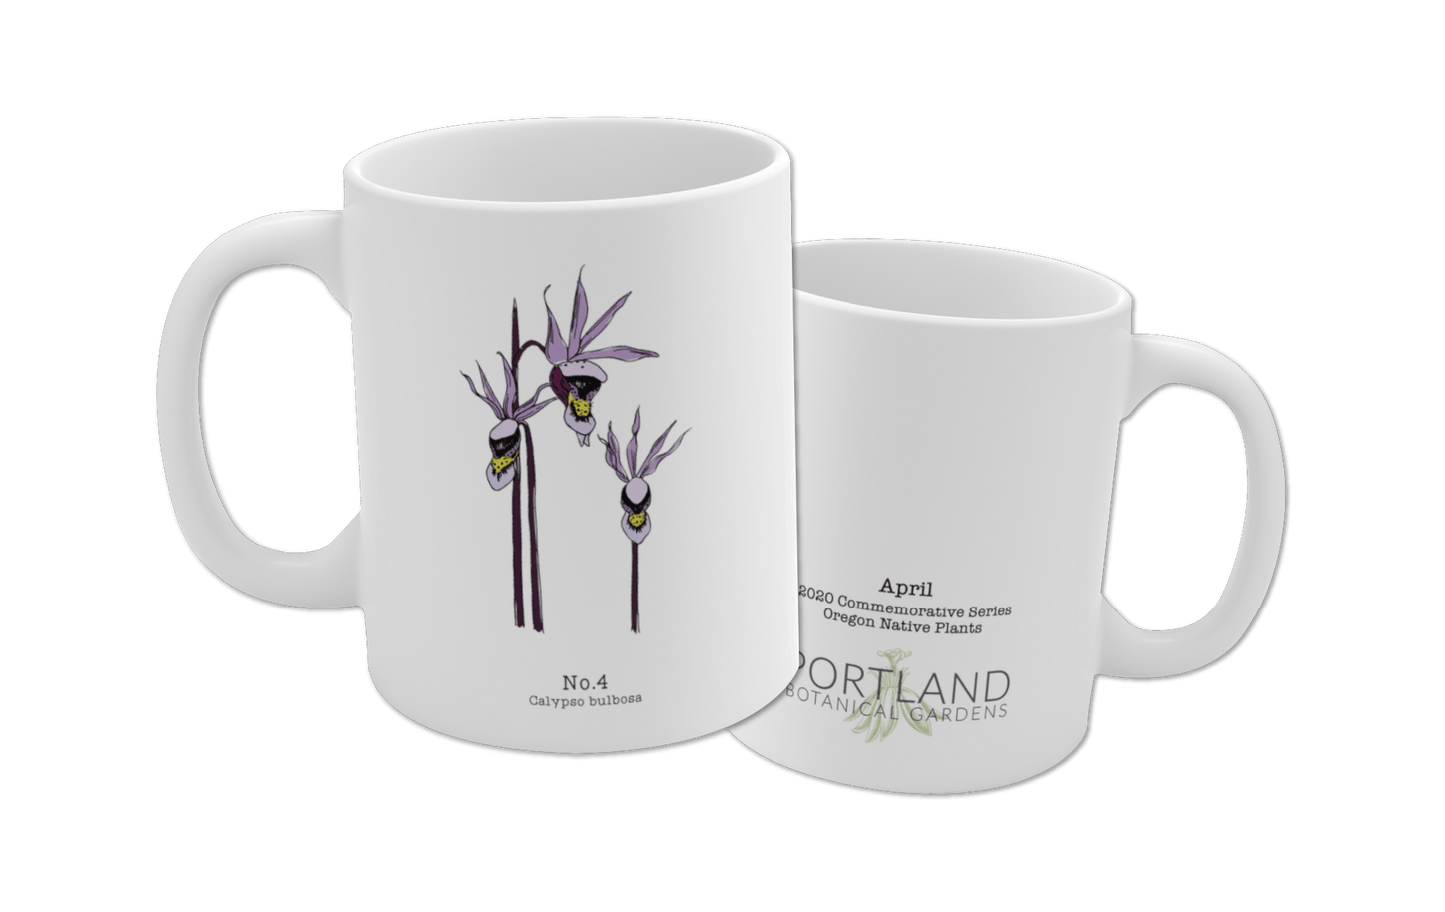 Oregon Native Plants - Month Mug